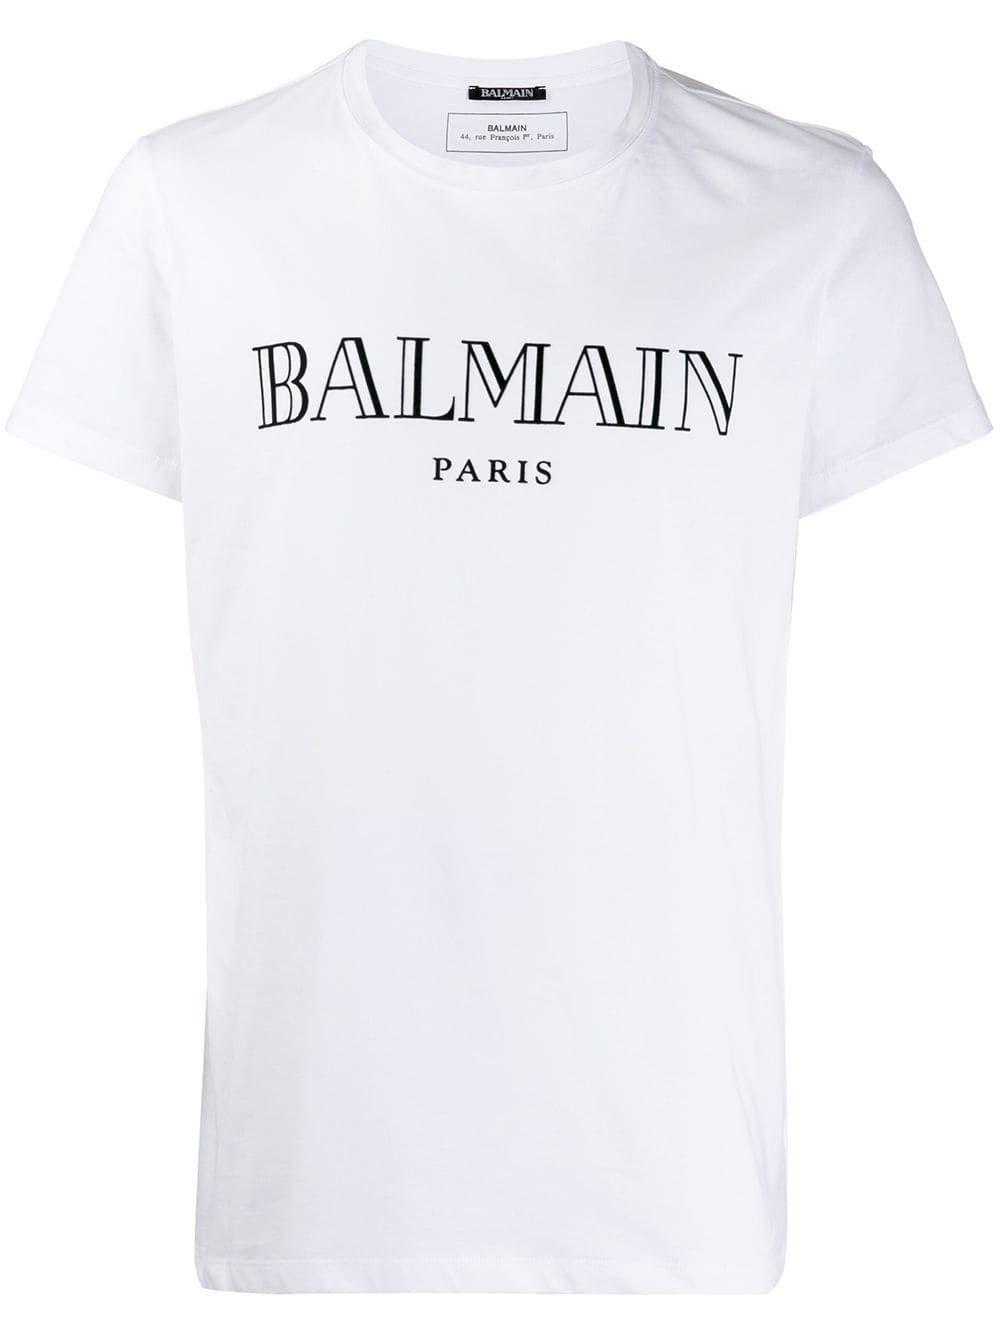 Balmain White Cotton T-shirt for Men - Save 23% - Lyst